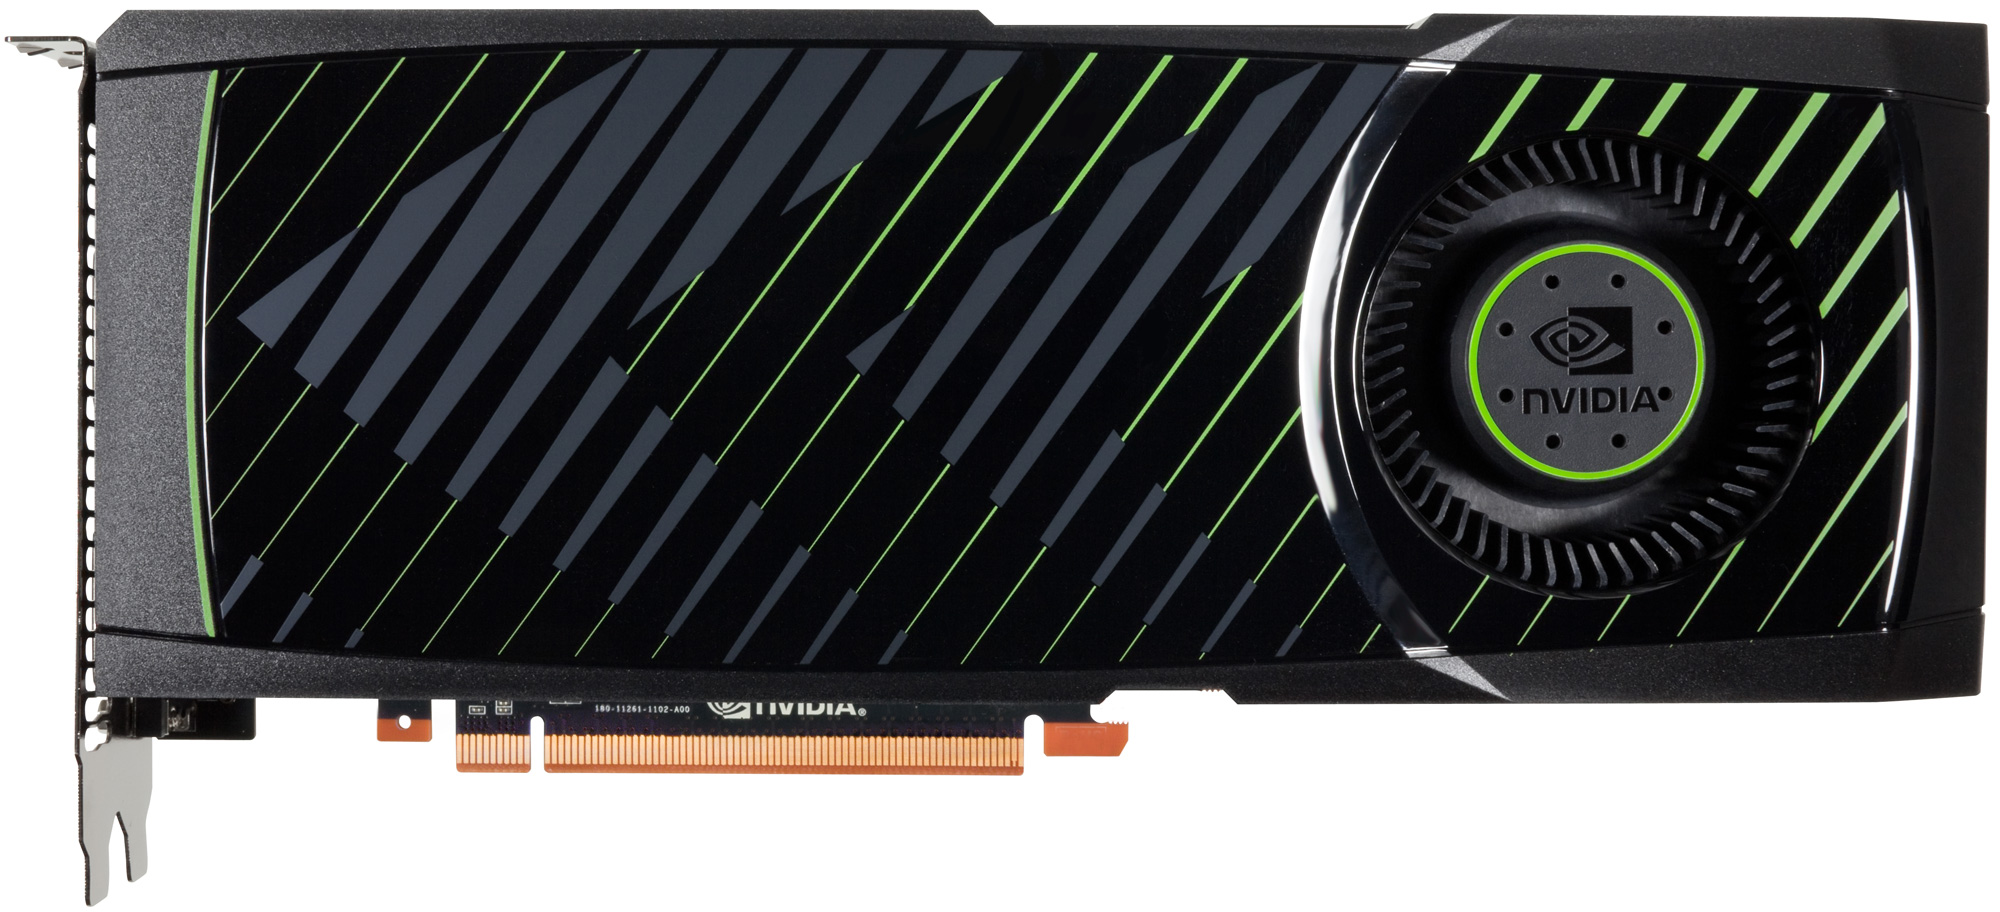 NVIDIA's GeForce GTX 570: Filling In 